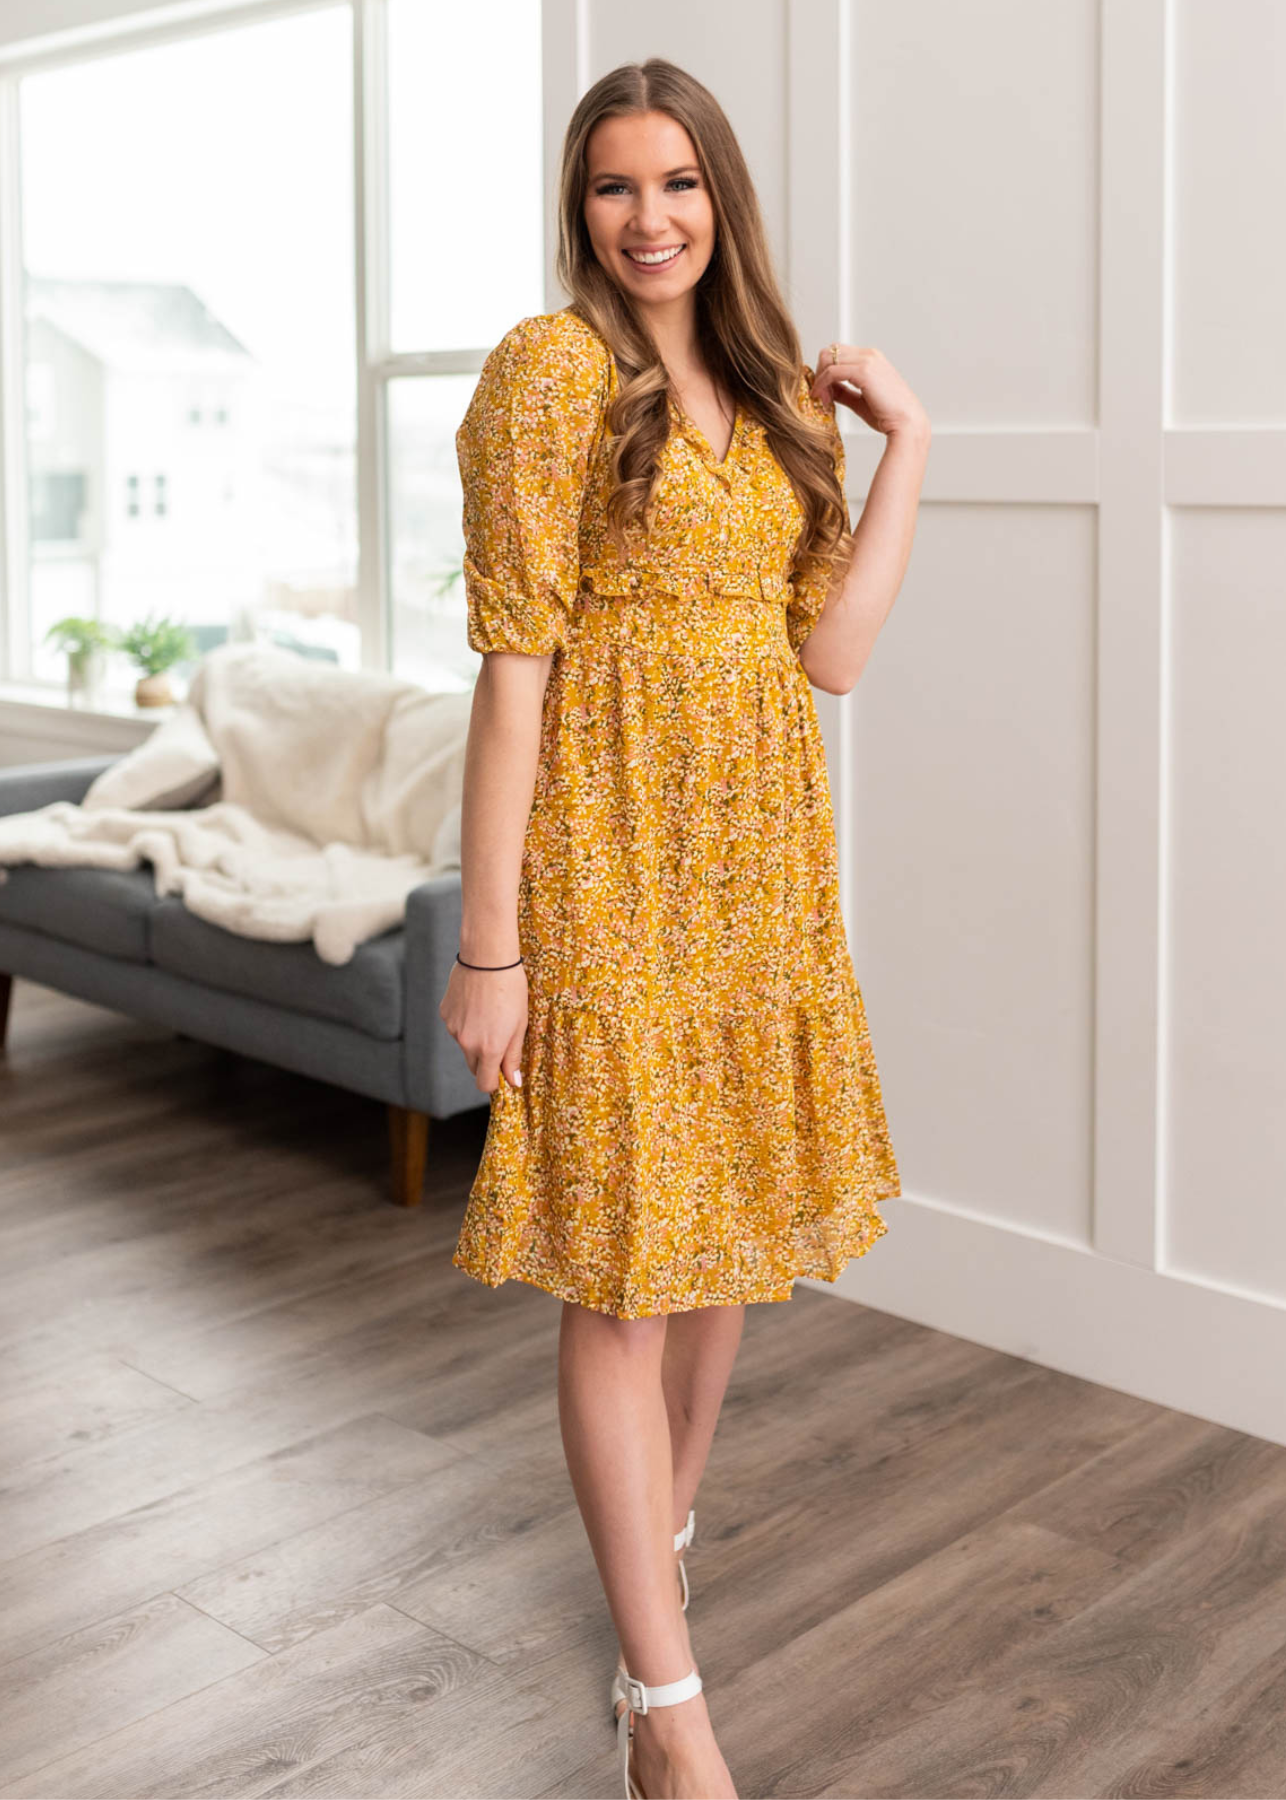 Short sleeve mustard floral dress